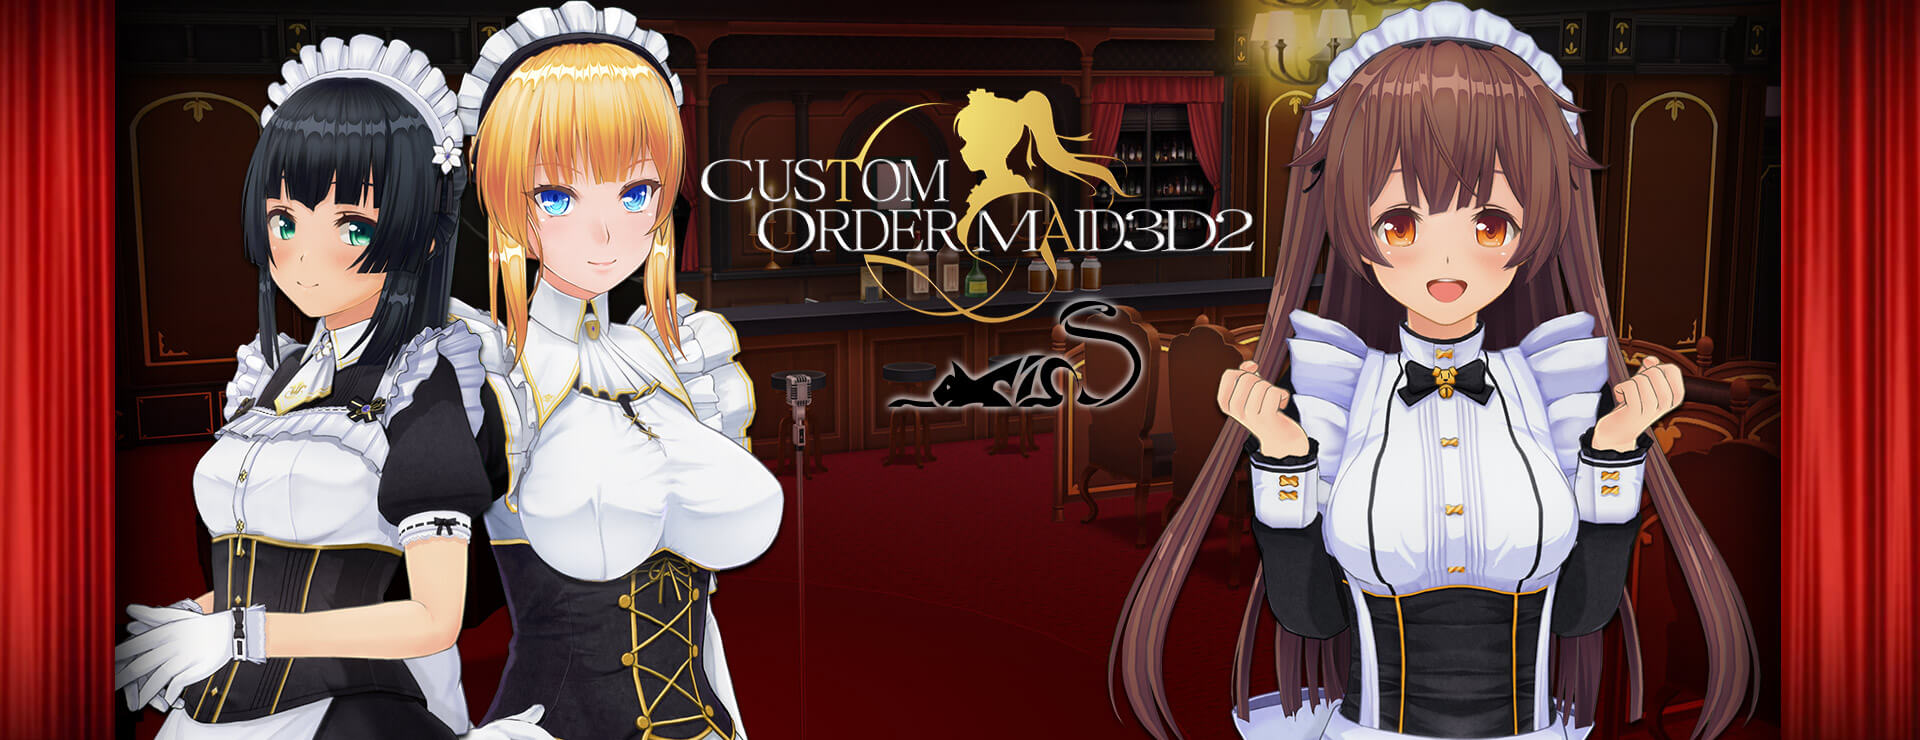 Custom Order Maid 3D 2: Happy New Year Lucky Bag 2024 type Adult - シミュレーション ゲーム